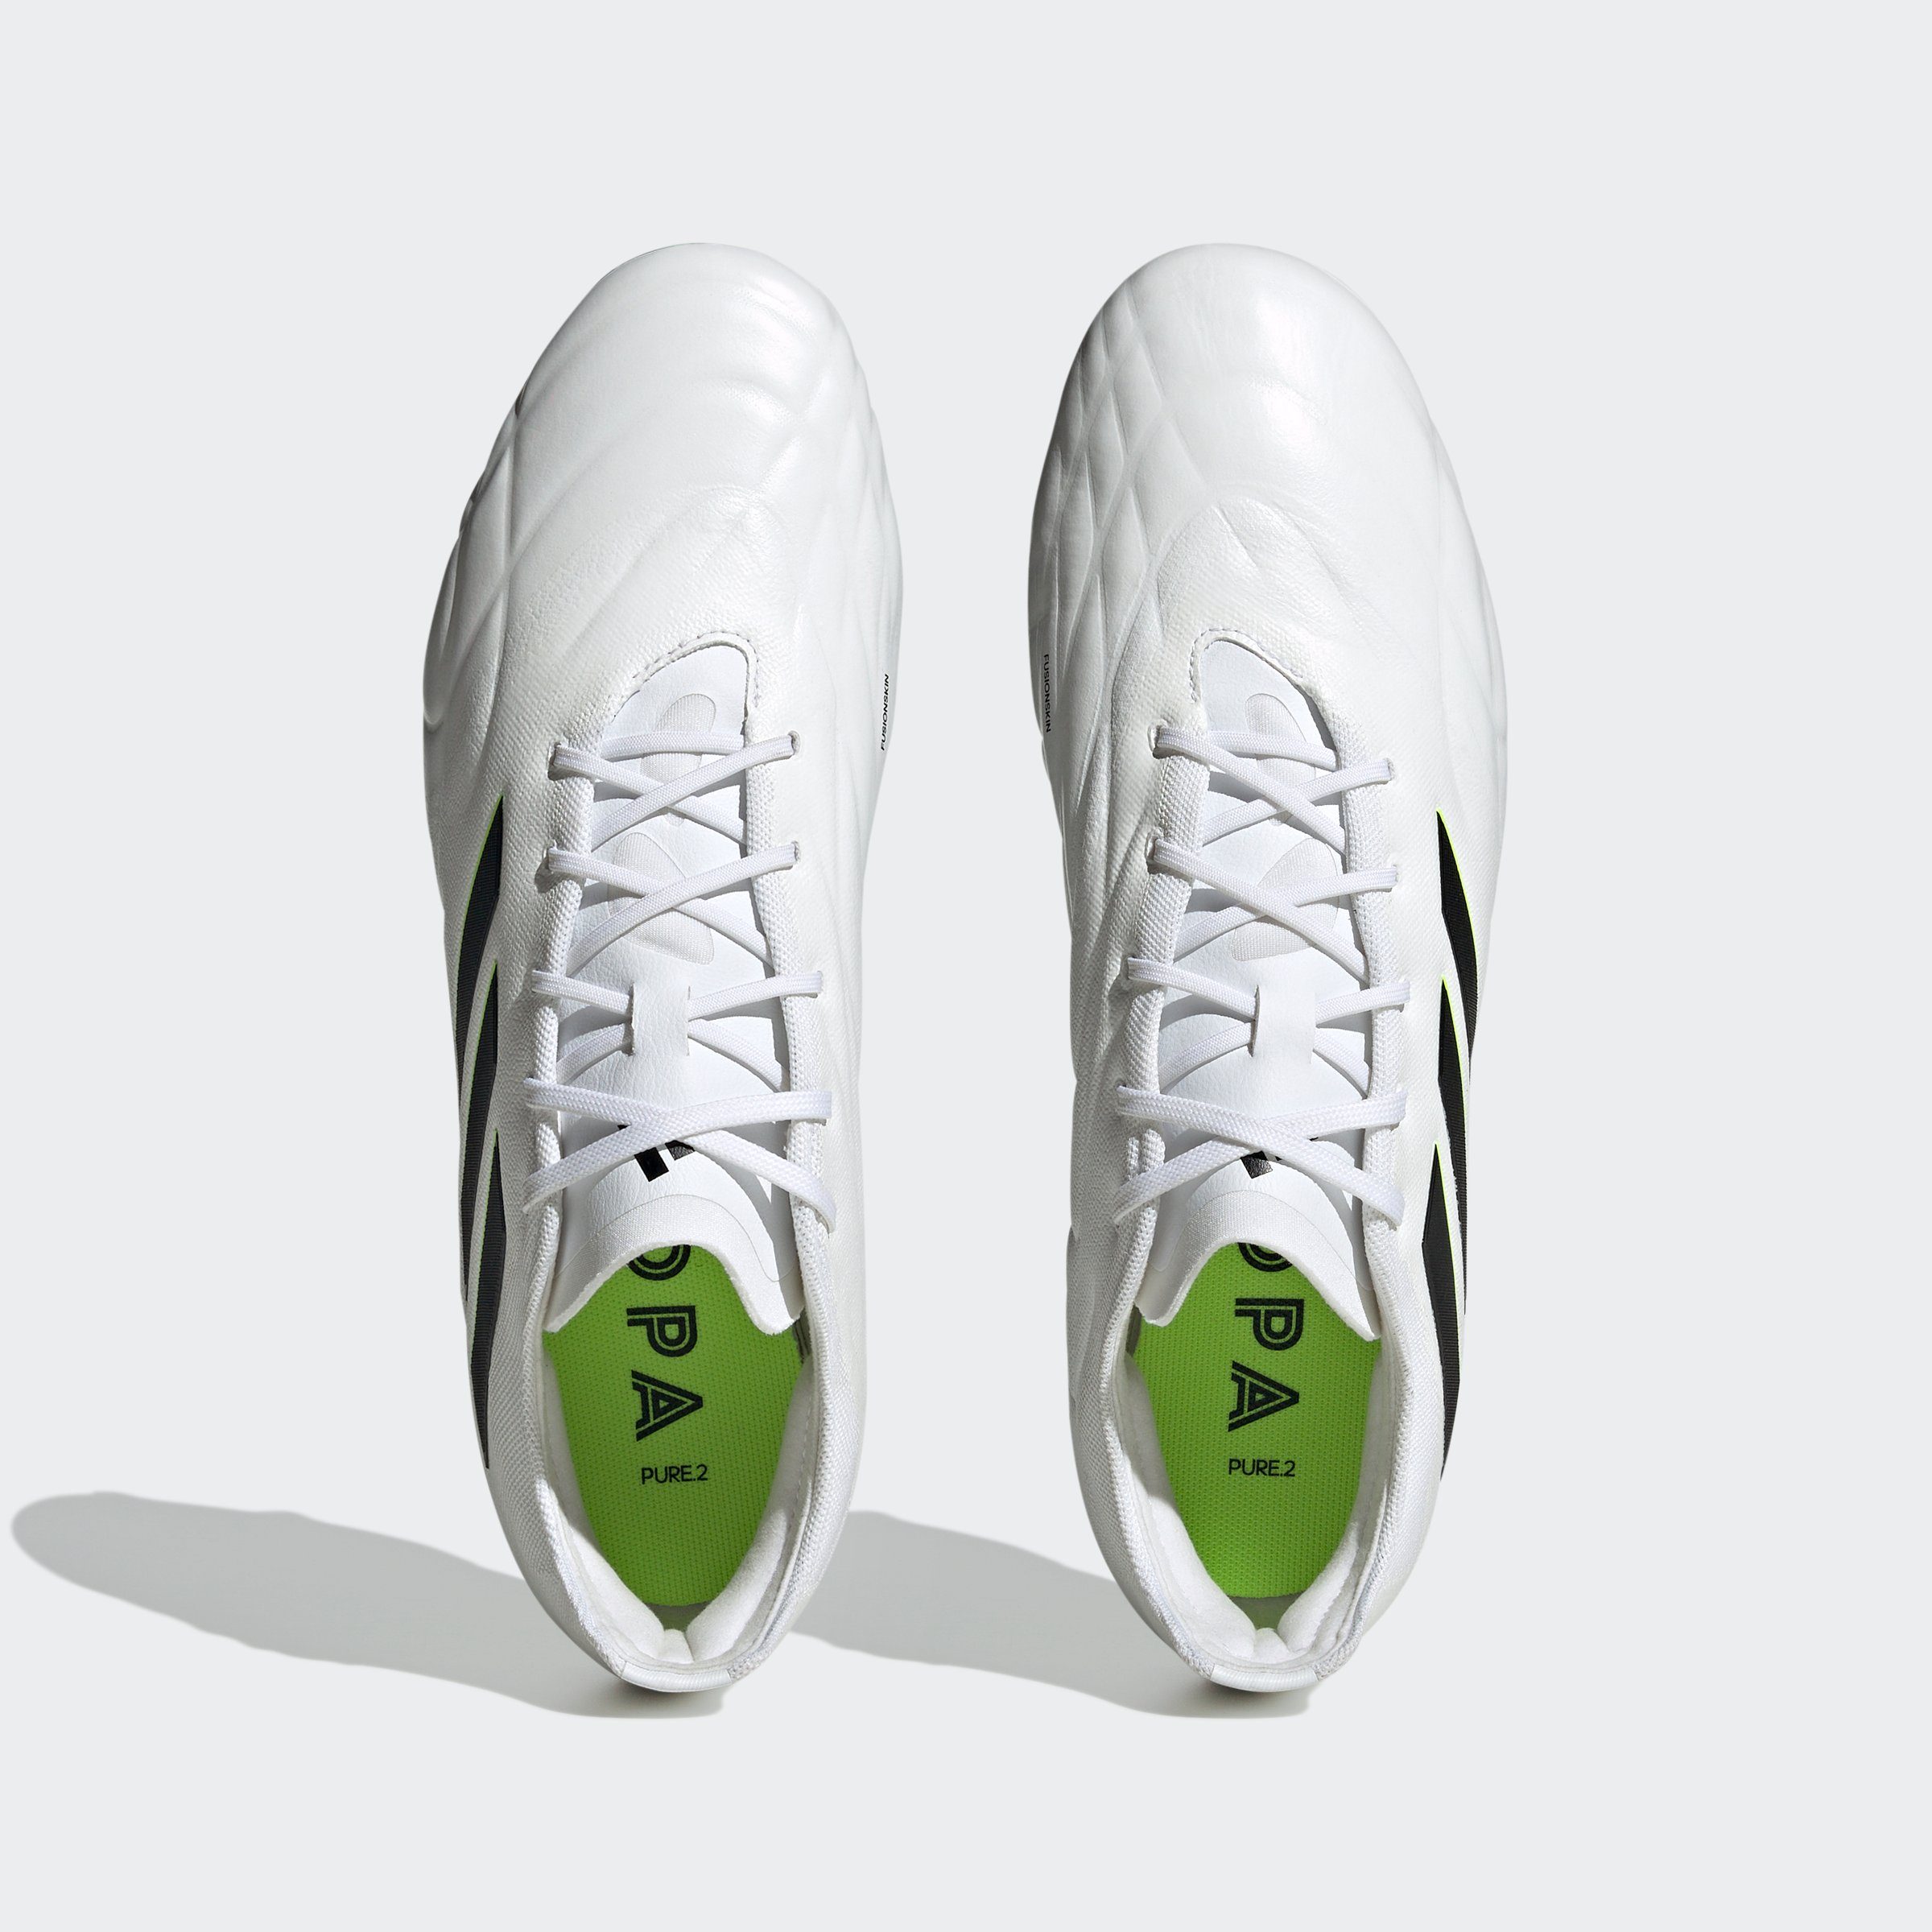 FG adidas Performance weissschwarzgelb Sportswear PURE COPA Fußballschuh II.2 adidas